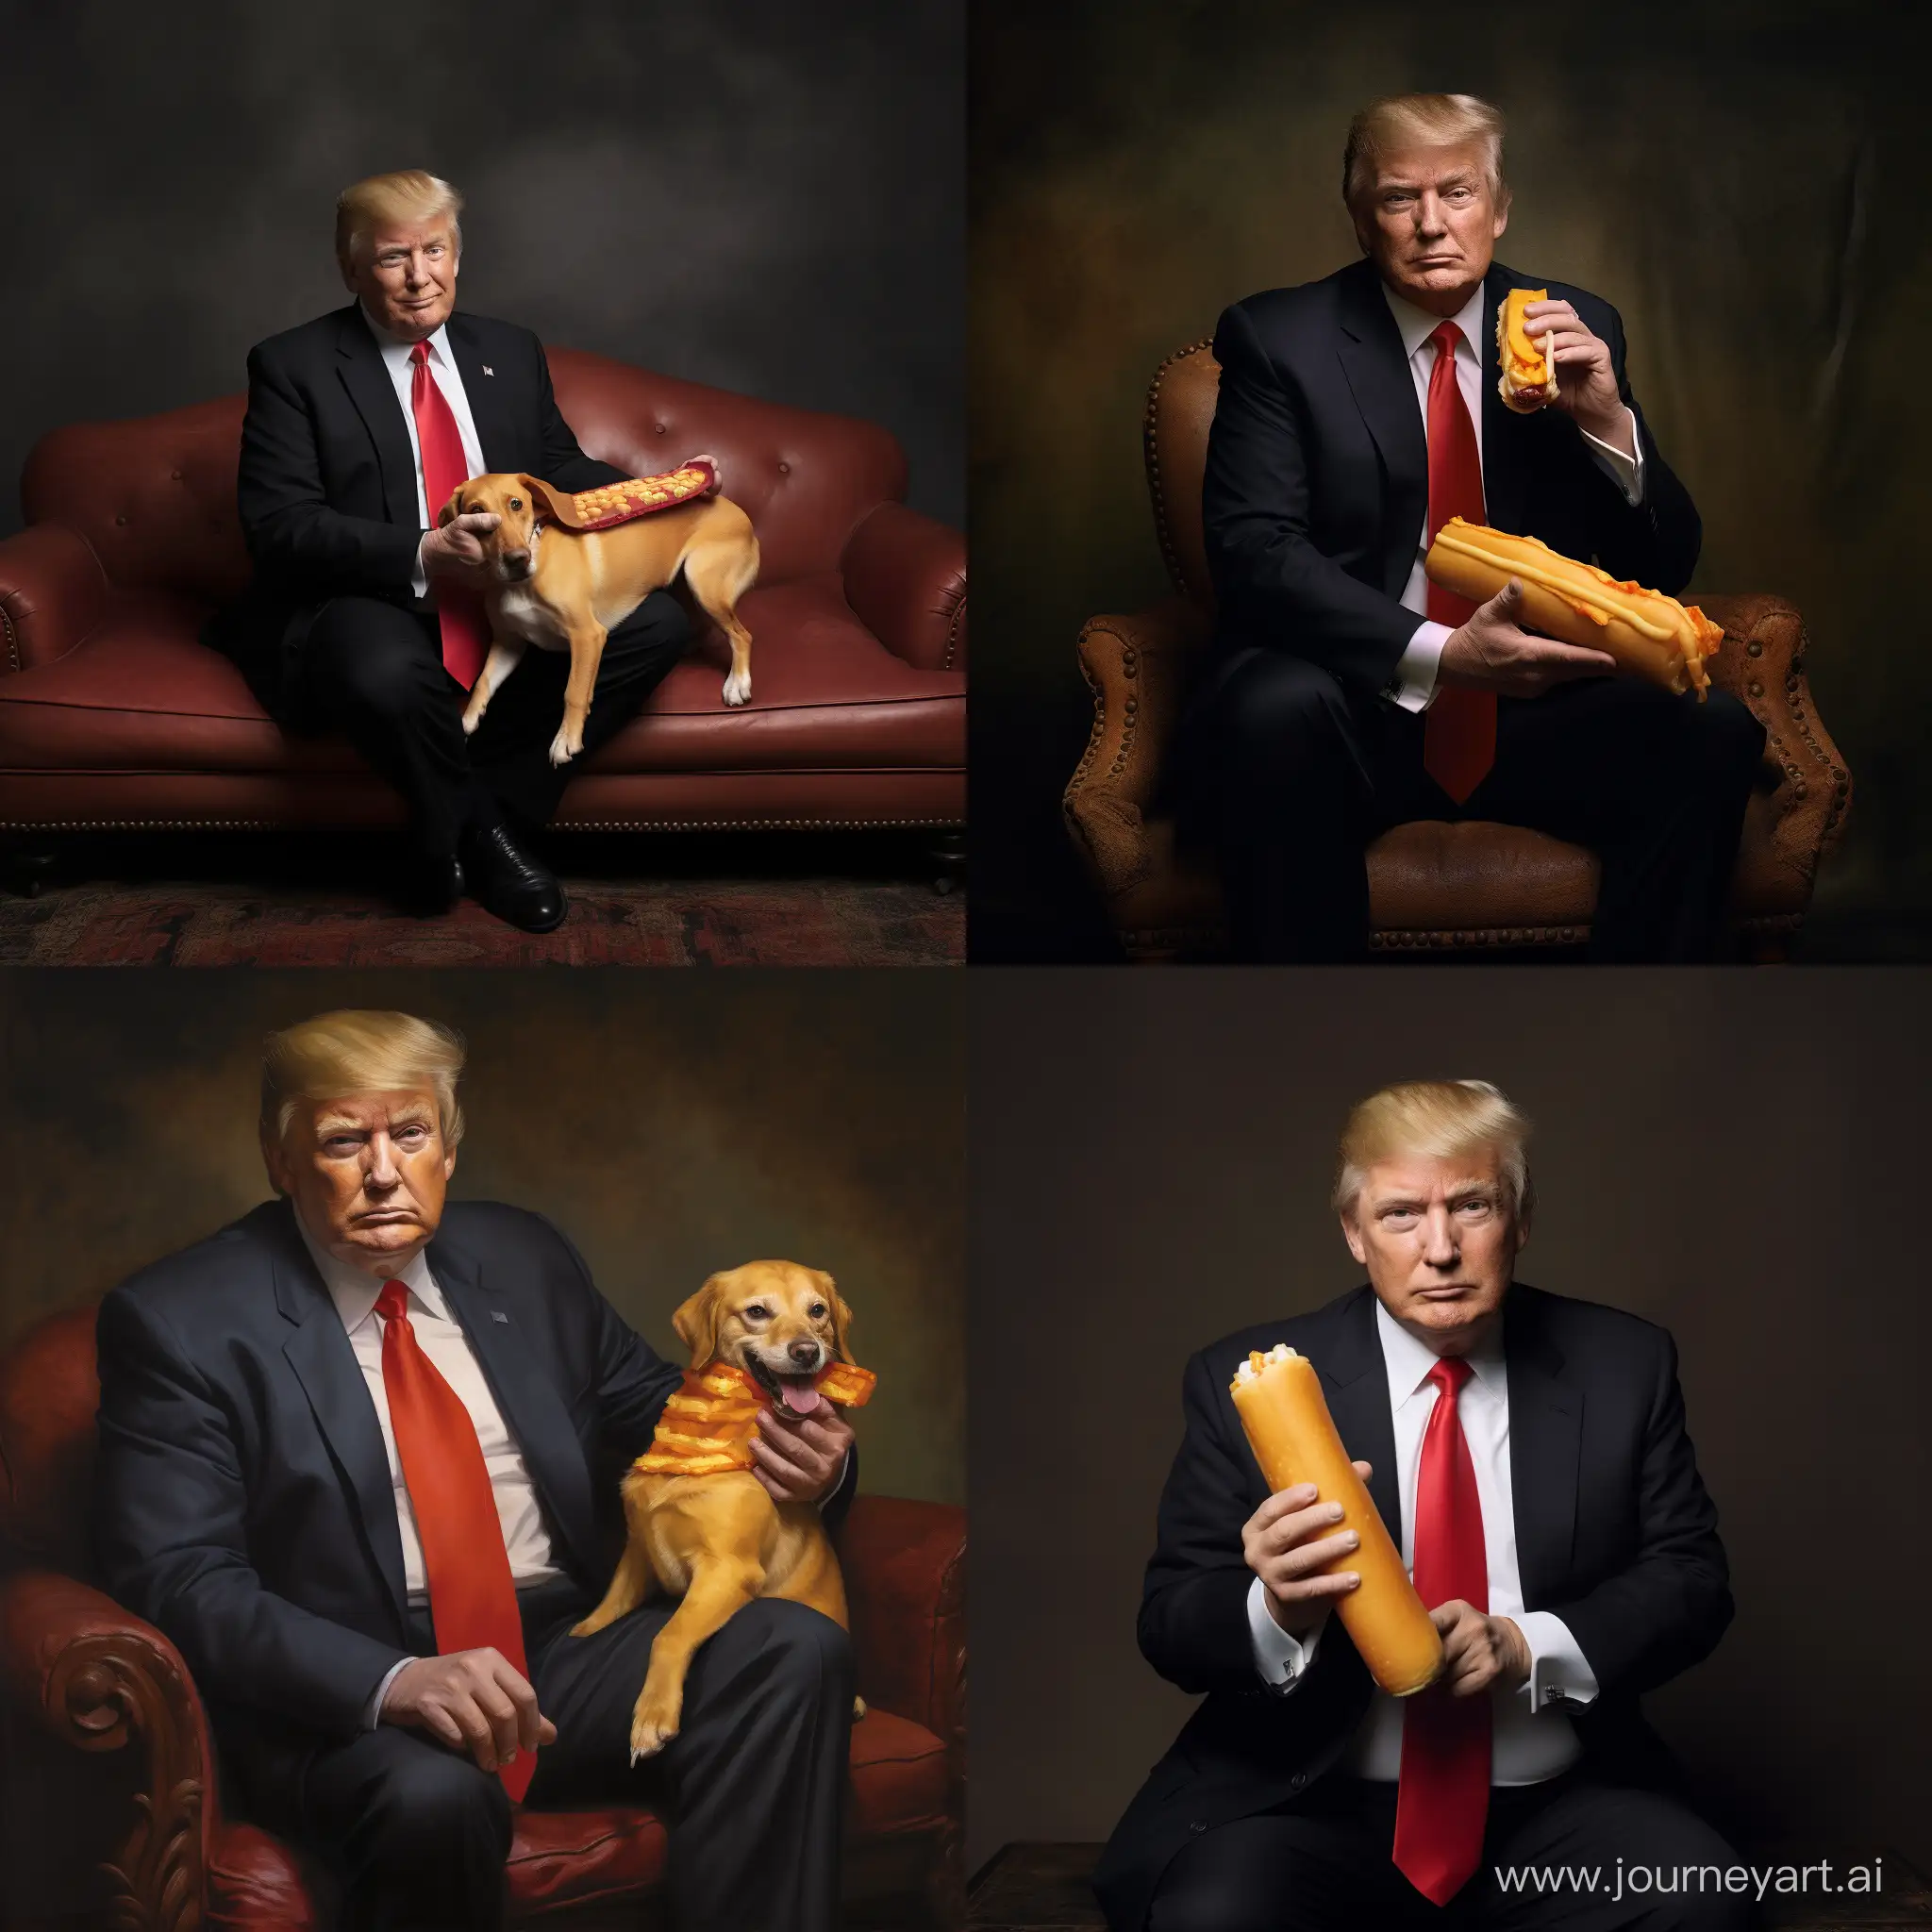 Trump holding a hot dog